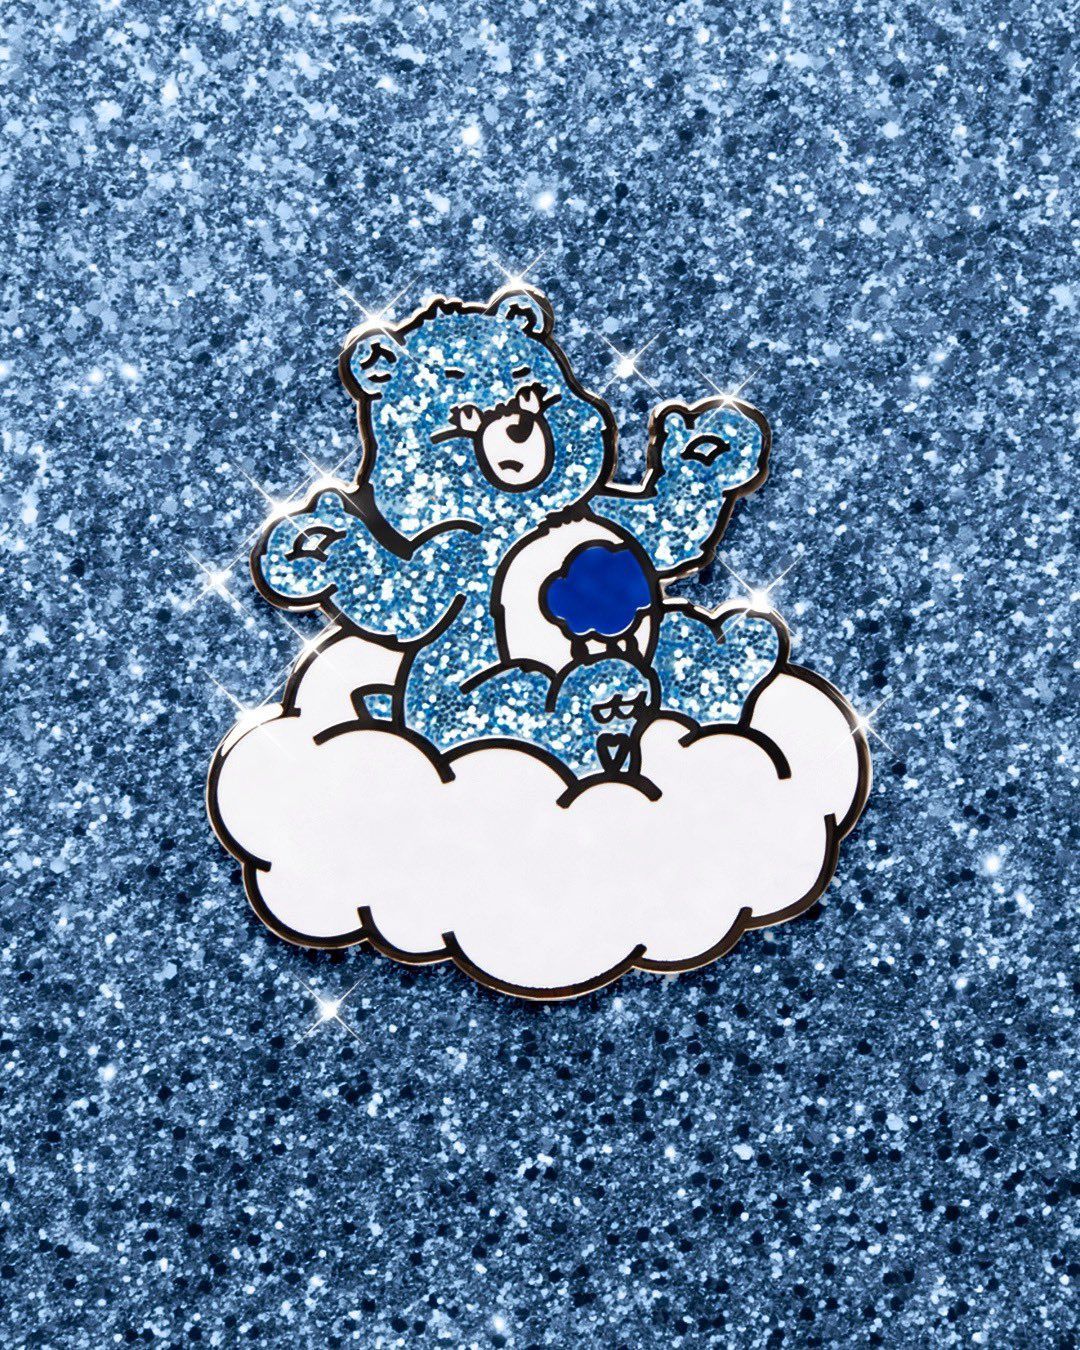 A Care Bears pin with a blue bear sitting on a cloud - Care Bears